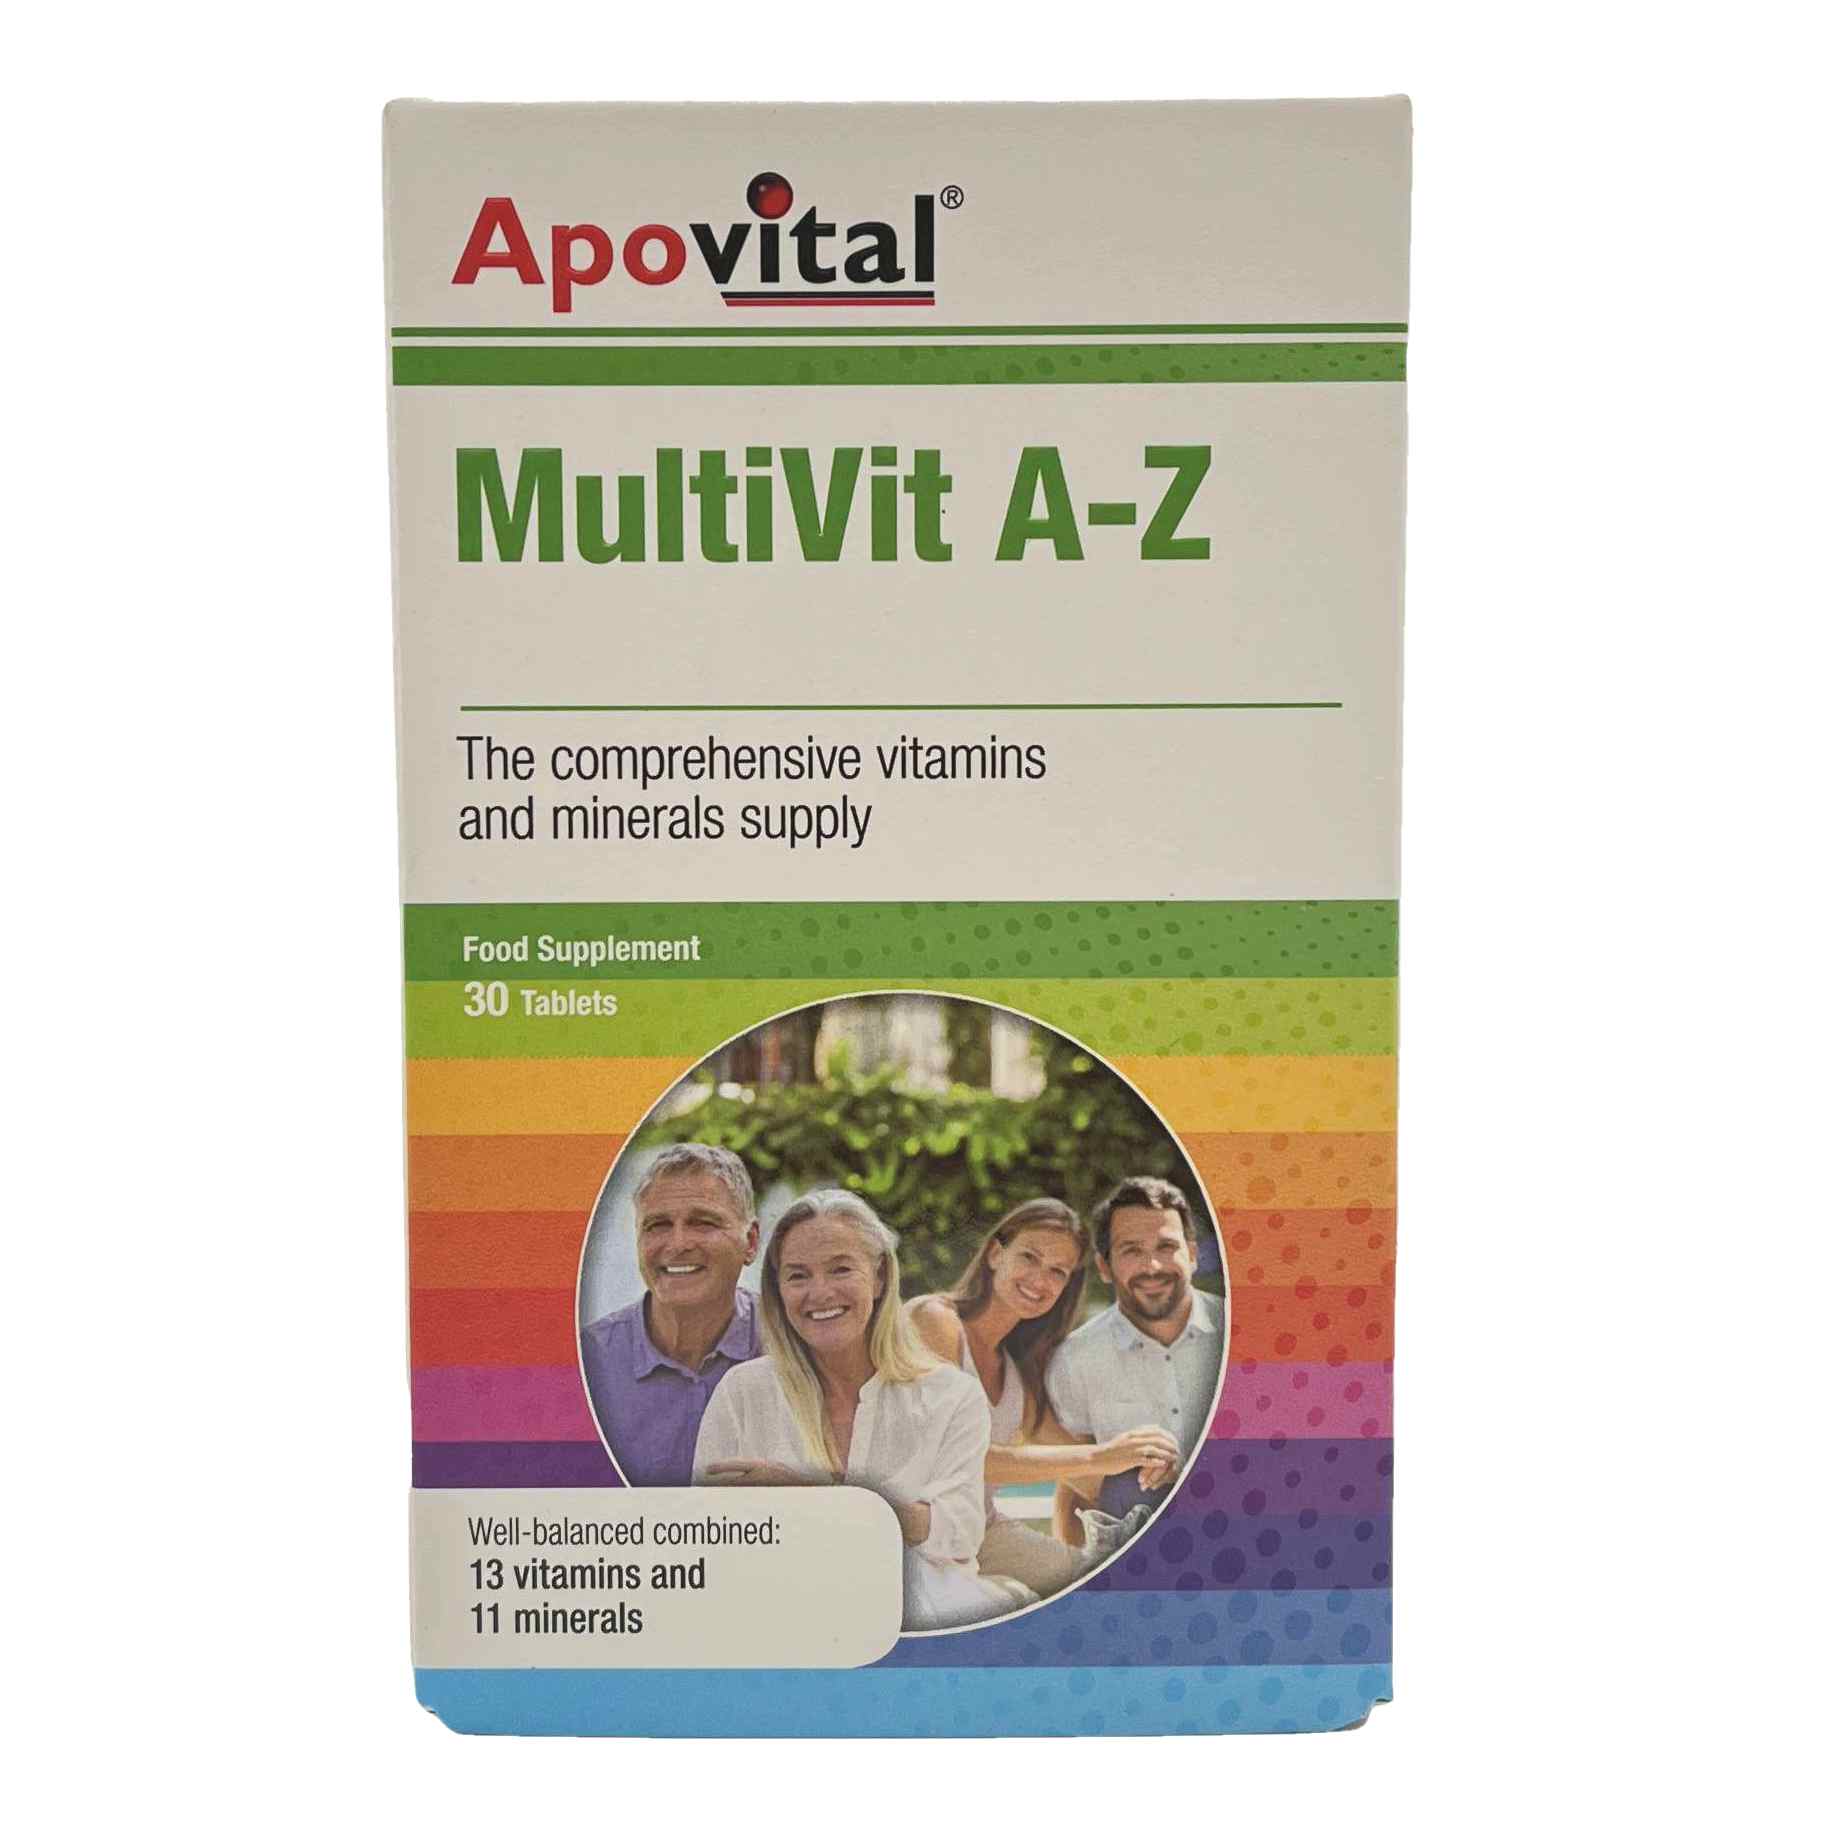 قرص مولتی ویت A-Z آپوویتال Apovital Multivit